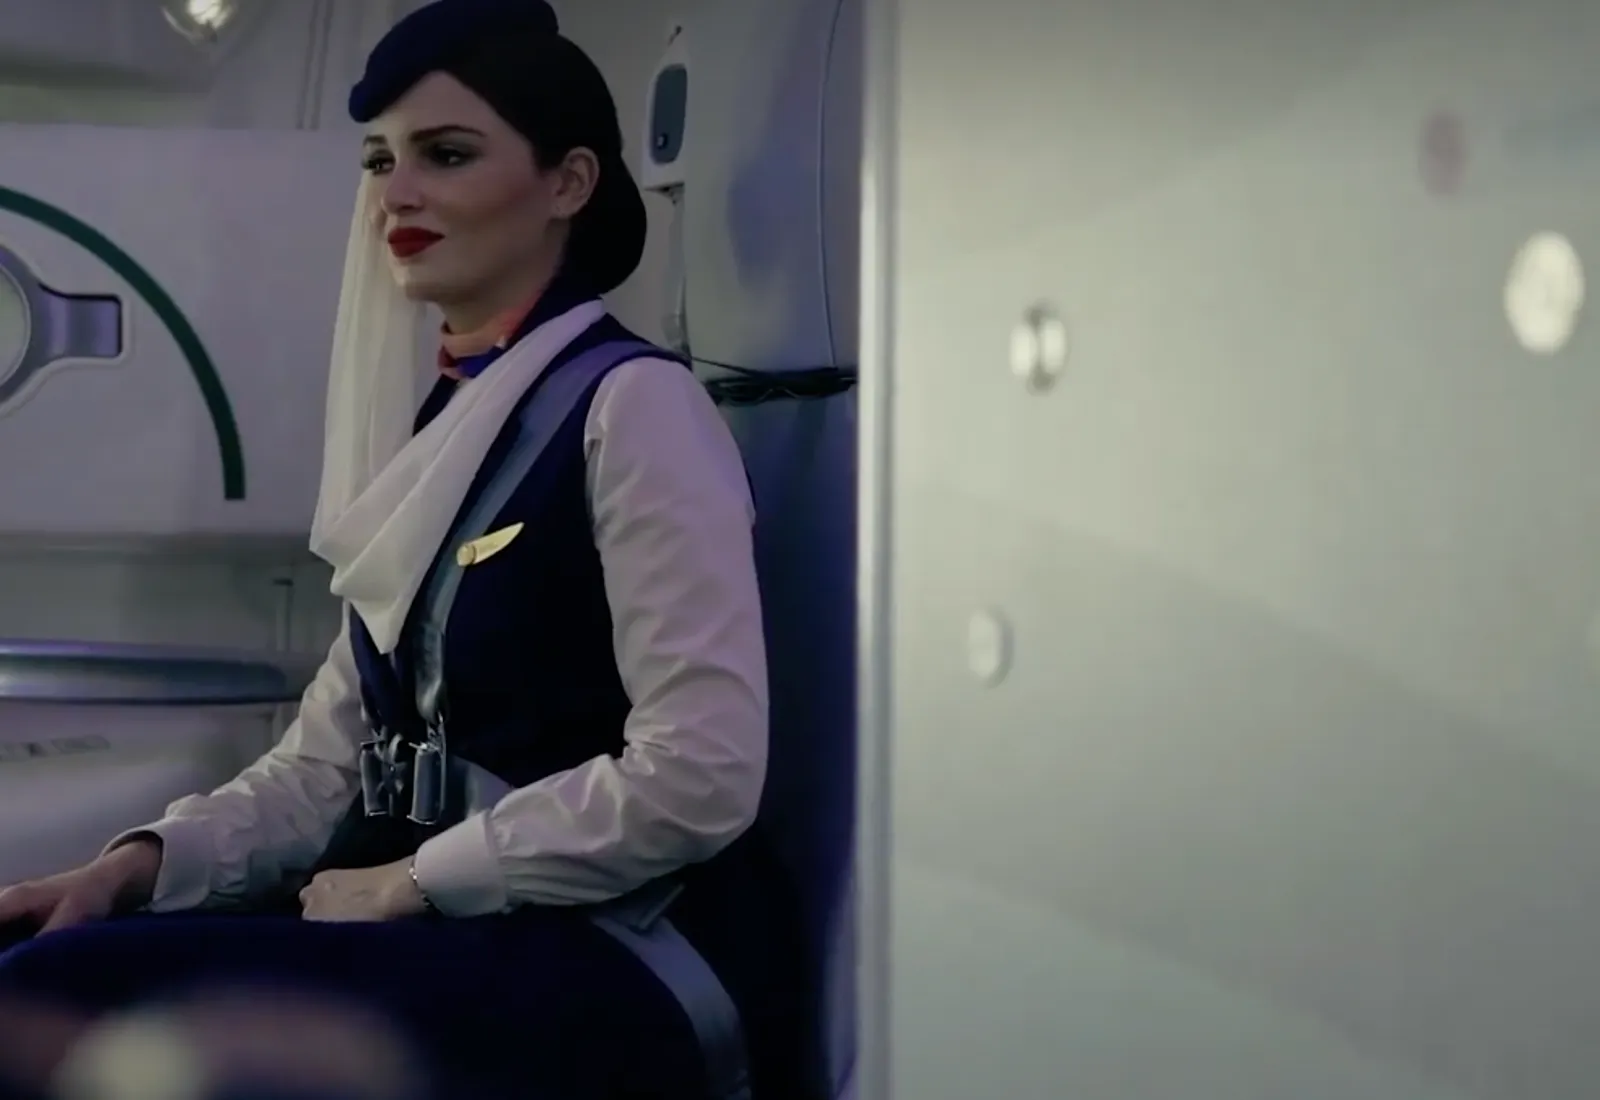 Saudia flight attendant sitting at jumpseat